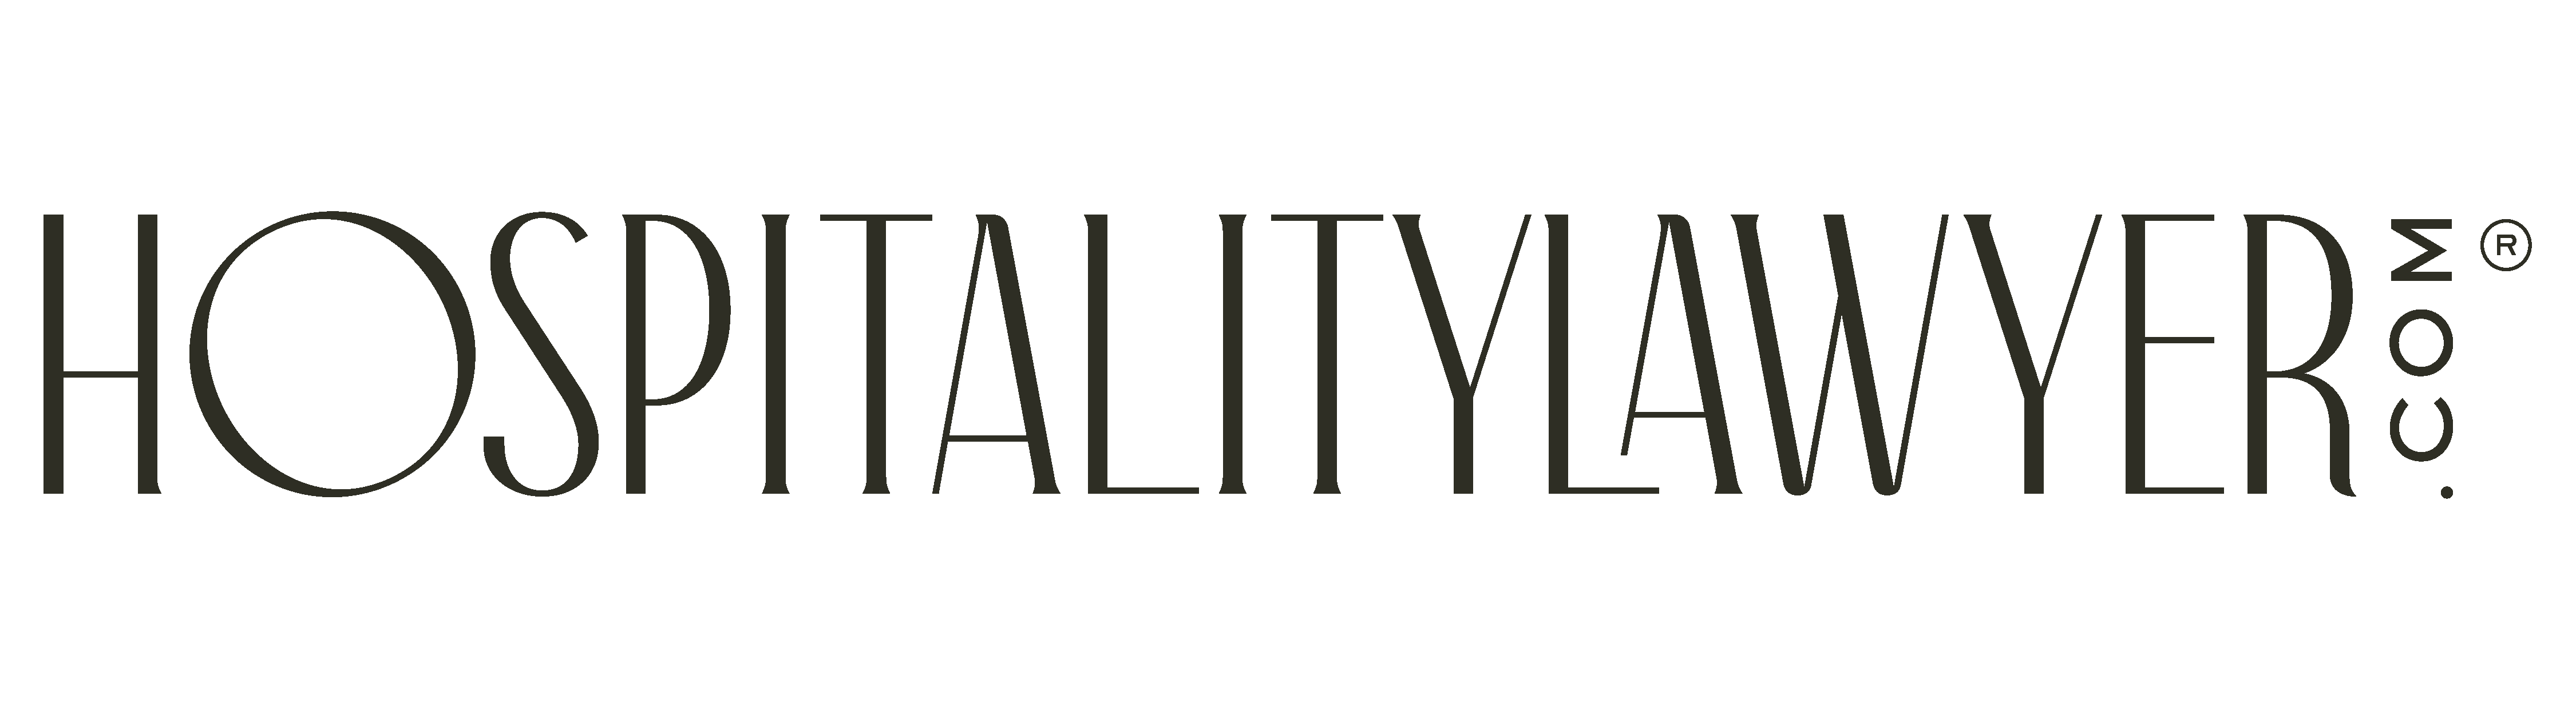 HospitalityLawyer.com® logo